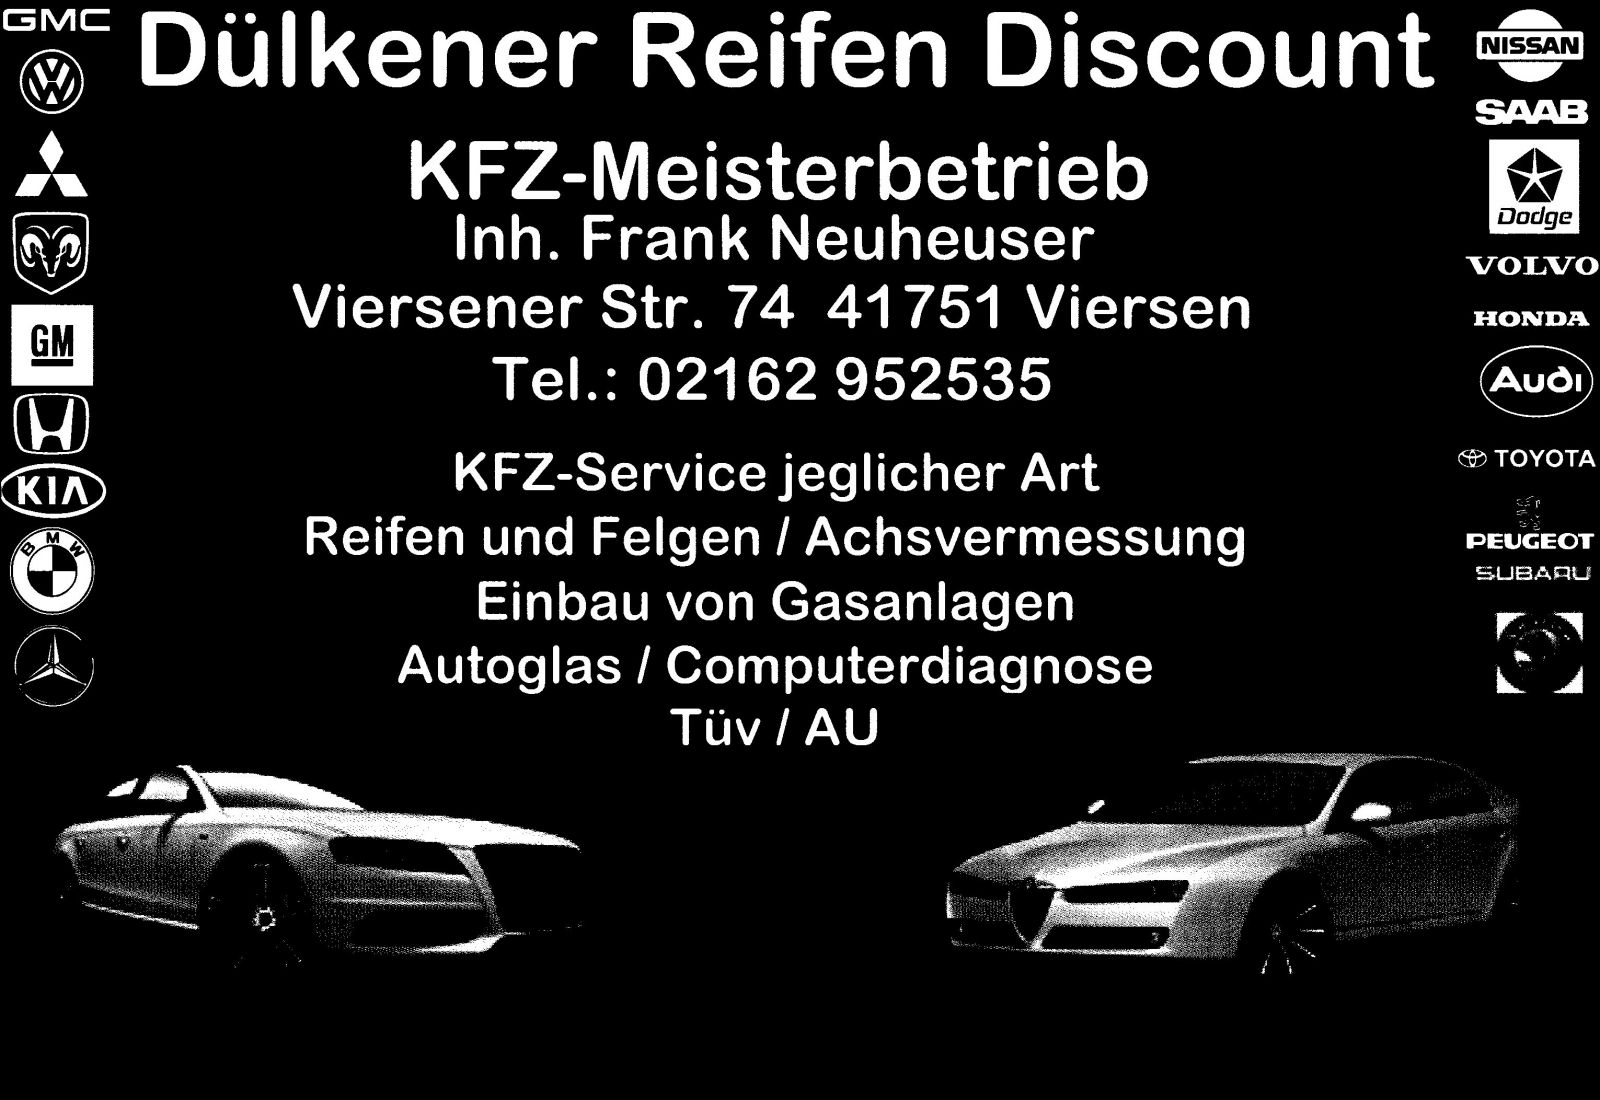 Dülkener Reifen Discount, Viersener Straße 74 in Viersen